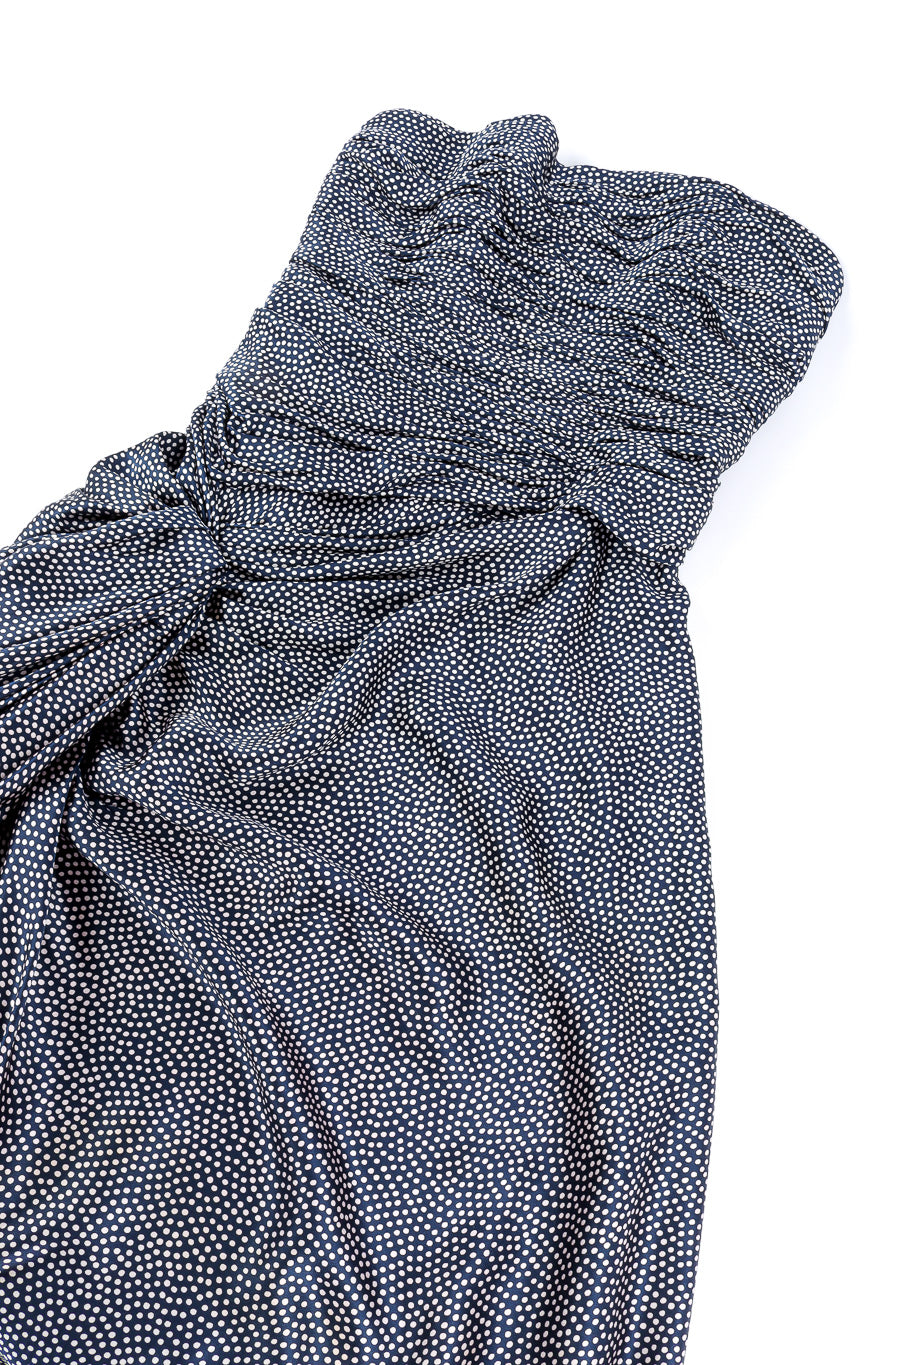 Jaqueline de Ribes polka dot dress with shawl flat-lay @recessla